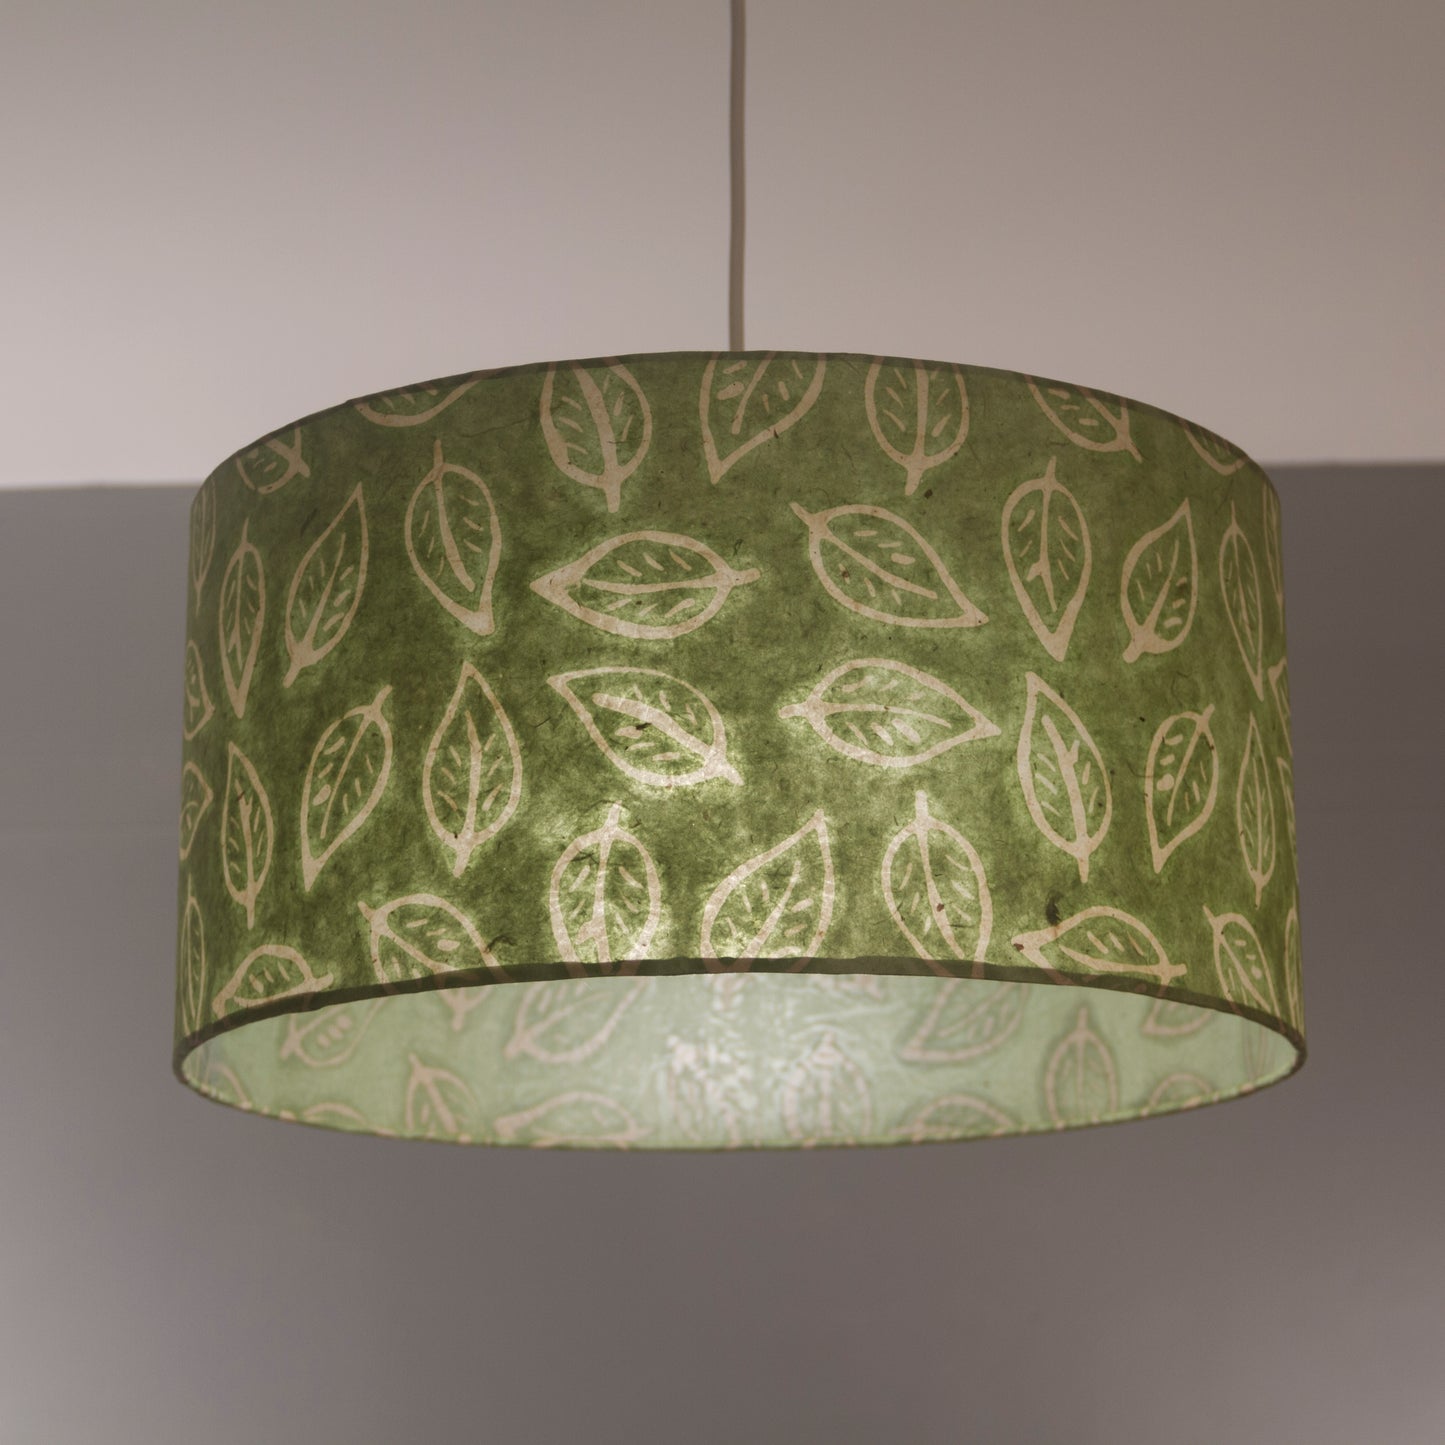 2 Tier Lamp Shade - P29 - Batik Leaf on Green, 40cm x 20cm & 30cm x 15cm